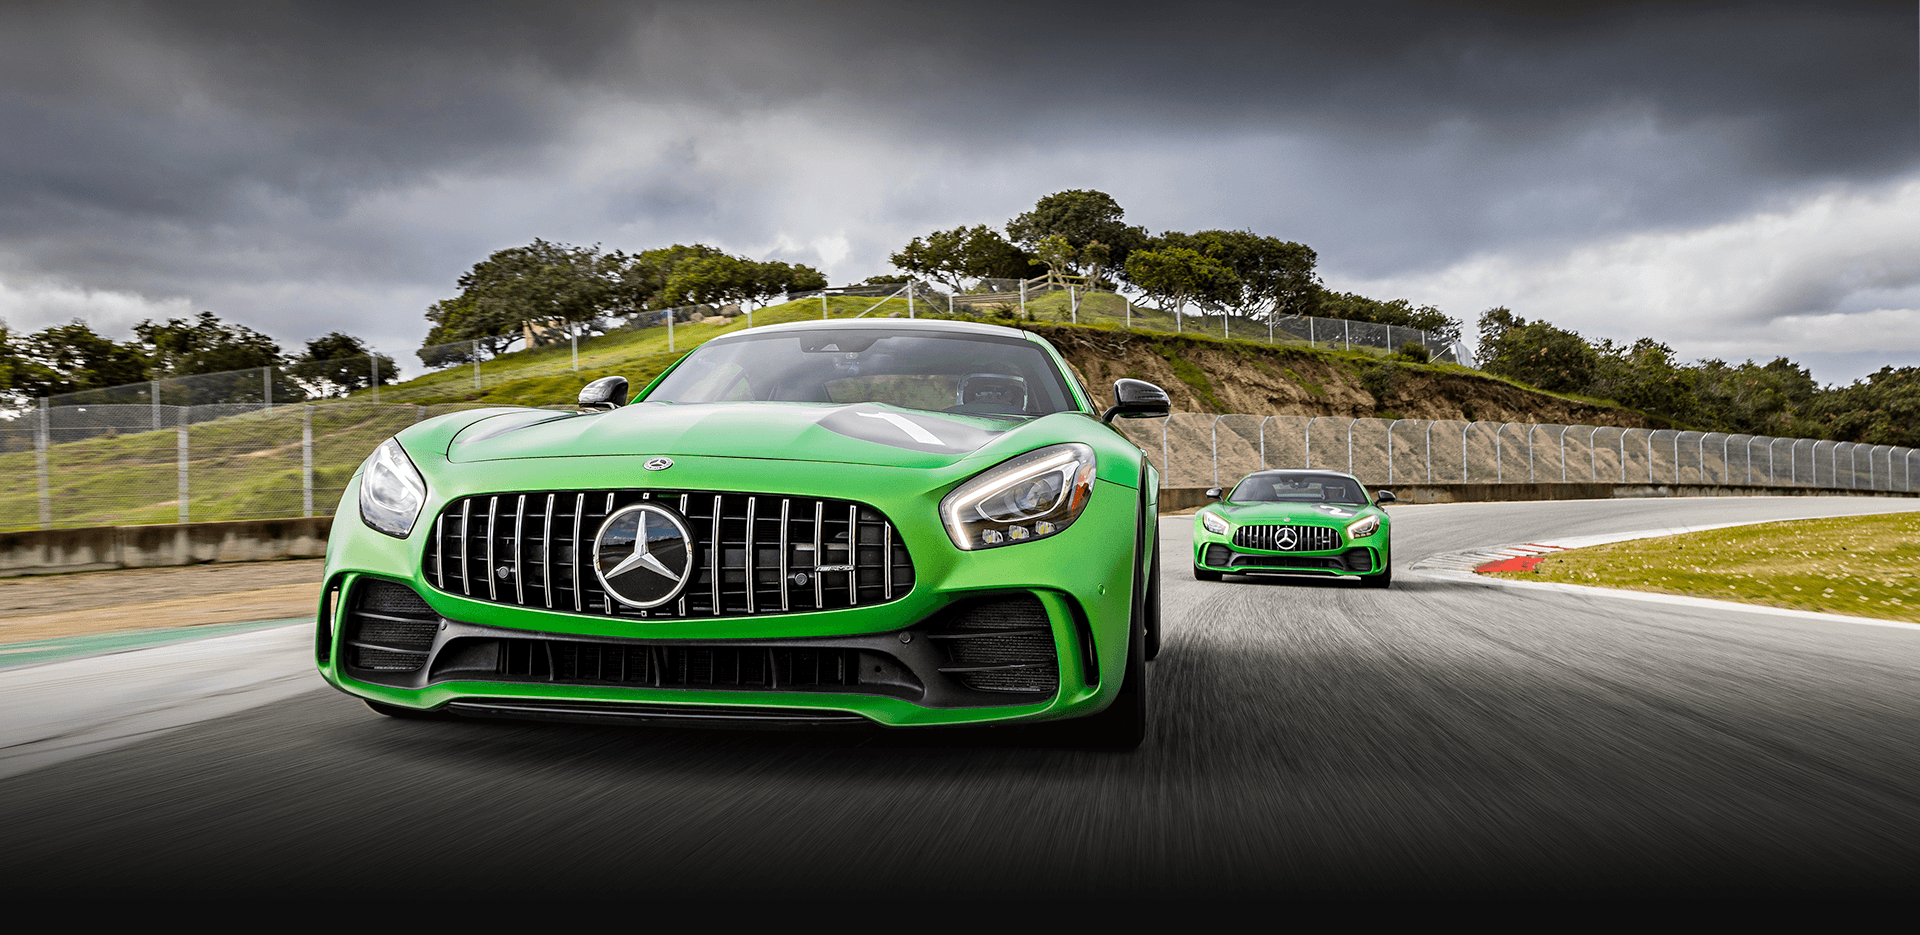 Two green Mercedes AMG Vehicles on Laguna Seca Raceway in Salinas, CA